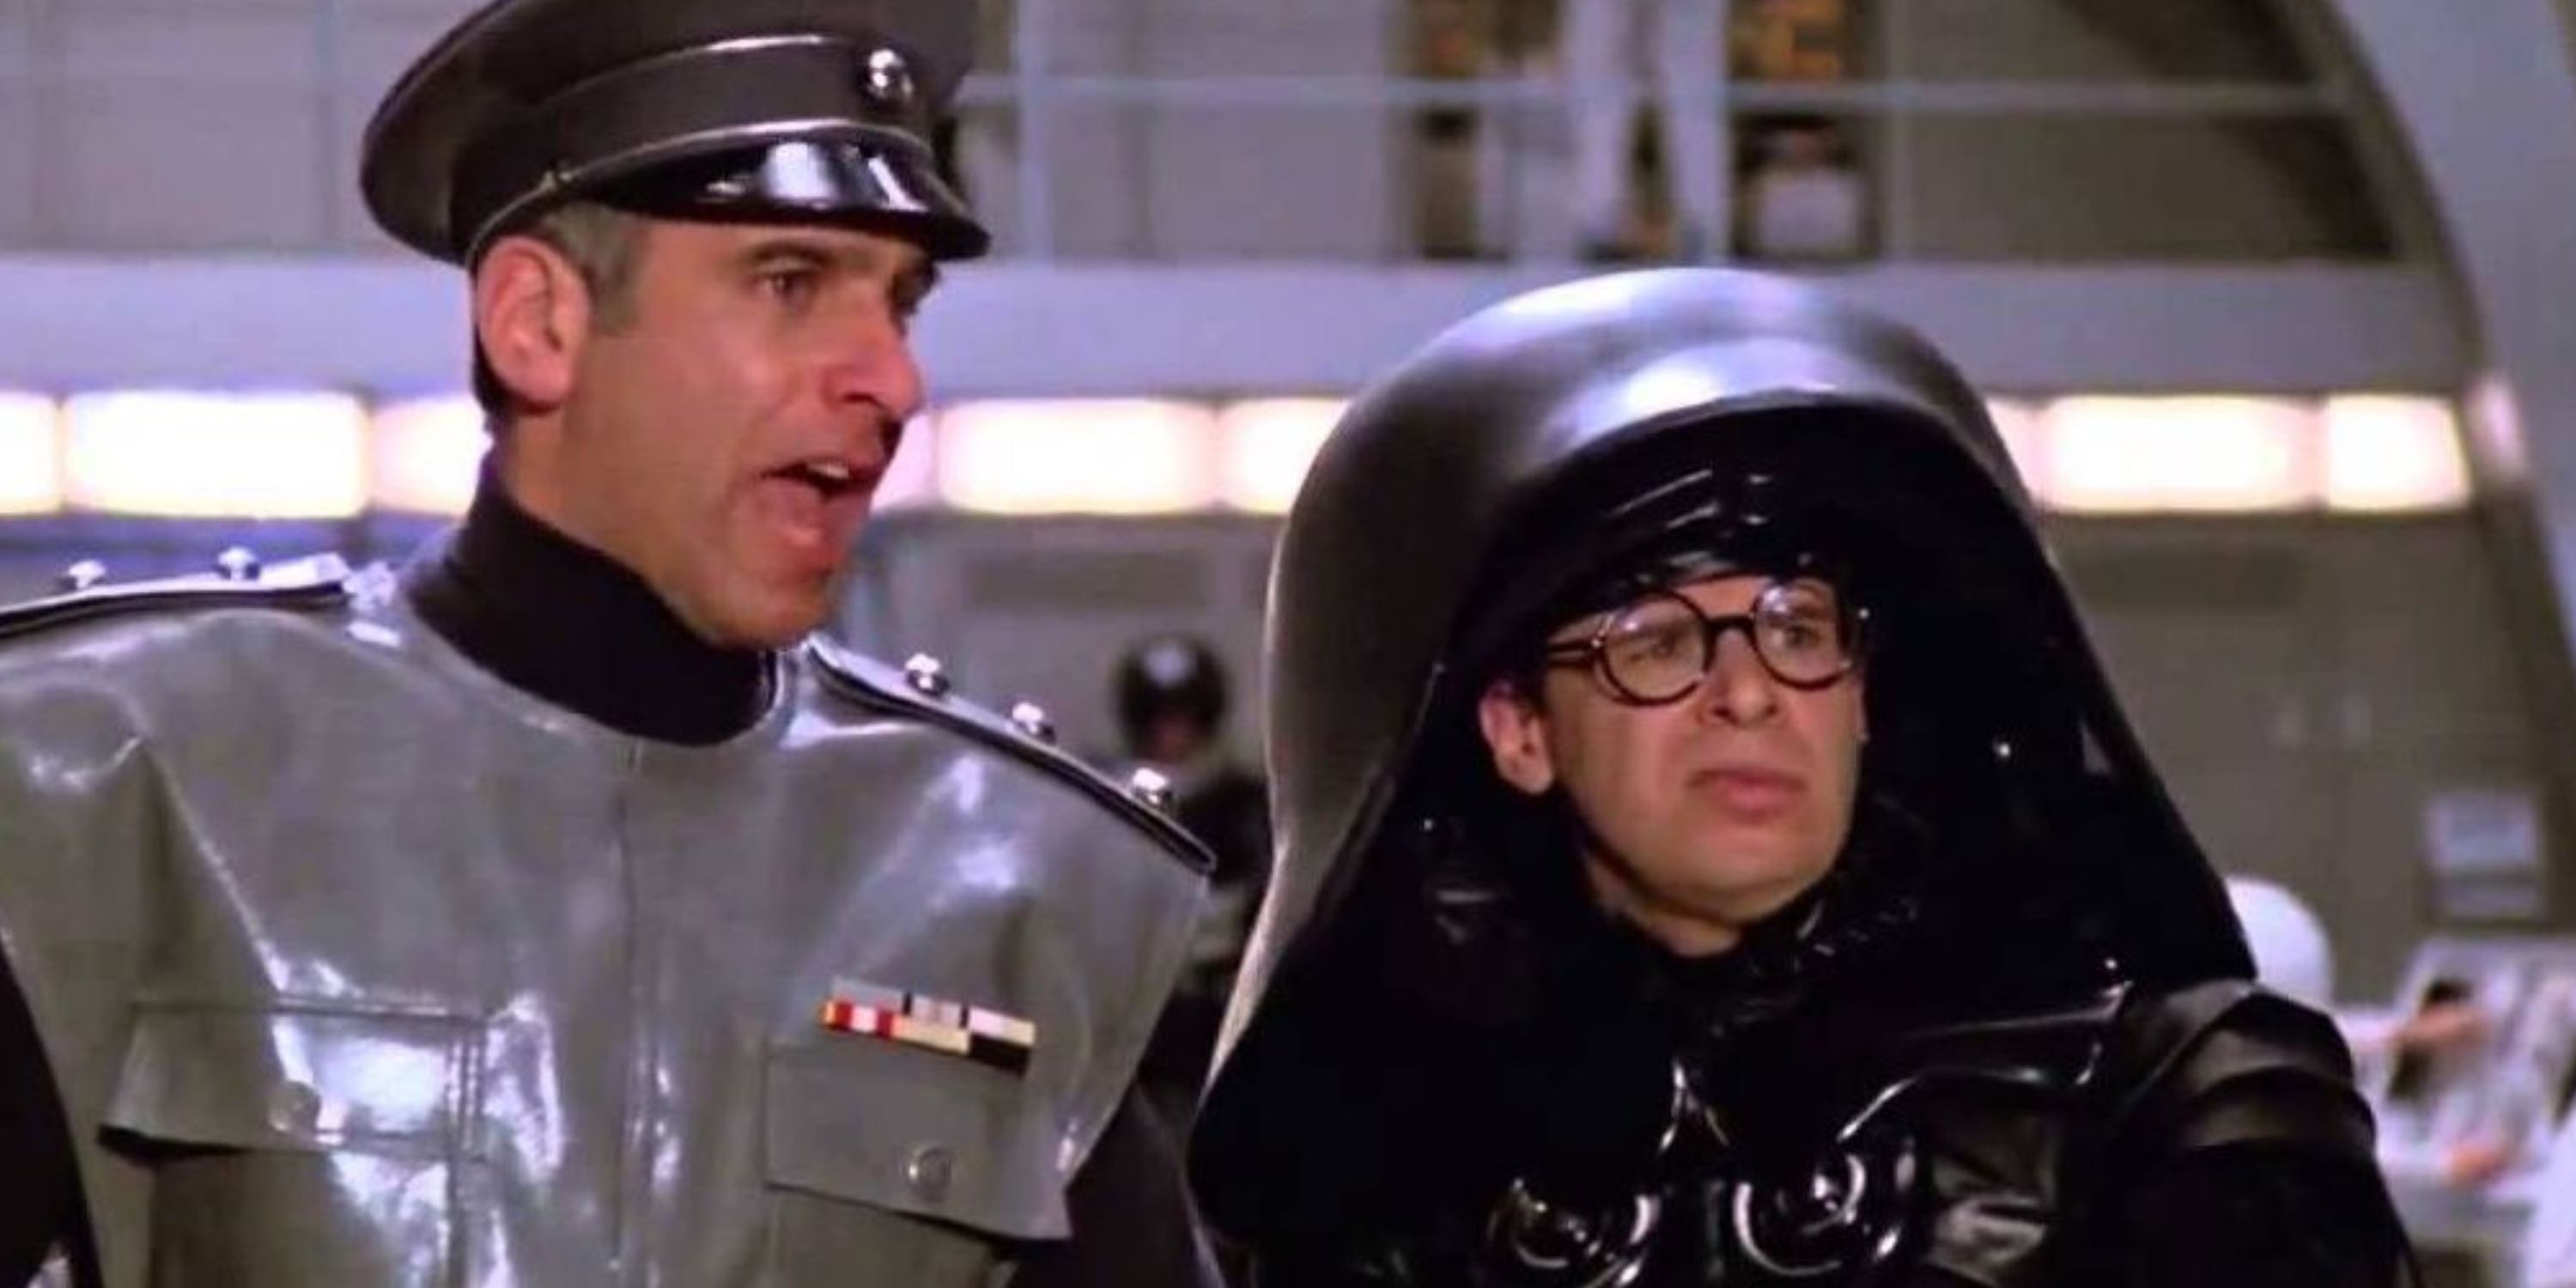 Colonel Sandurz and Dark Helmet talking on the bridge in Spaceballs